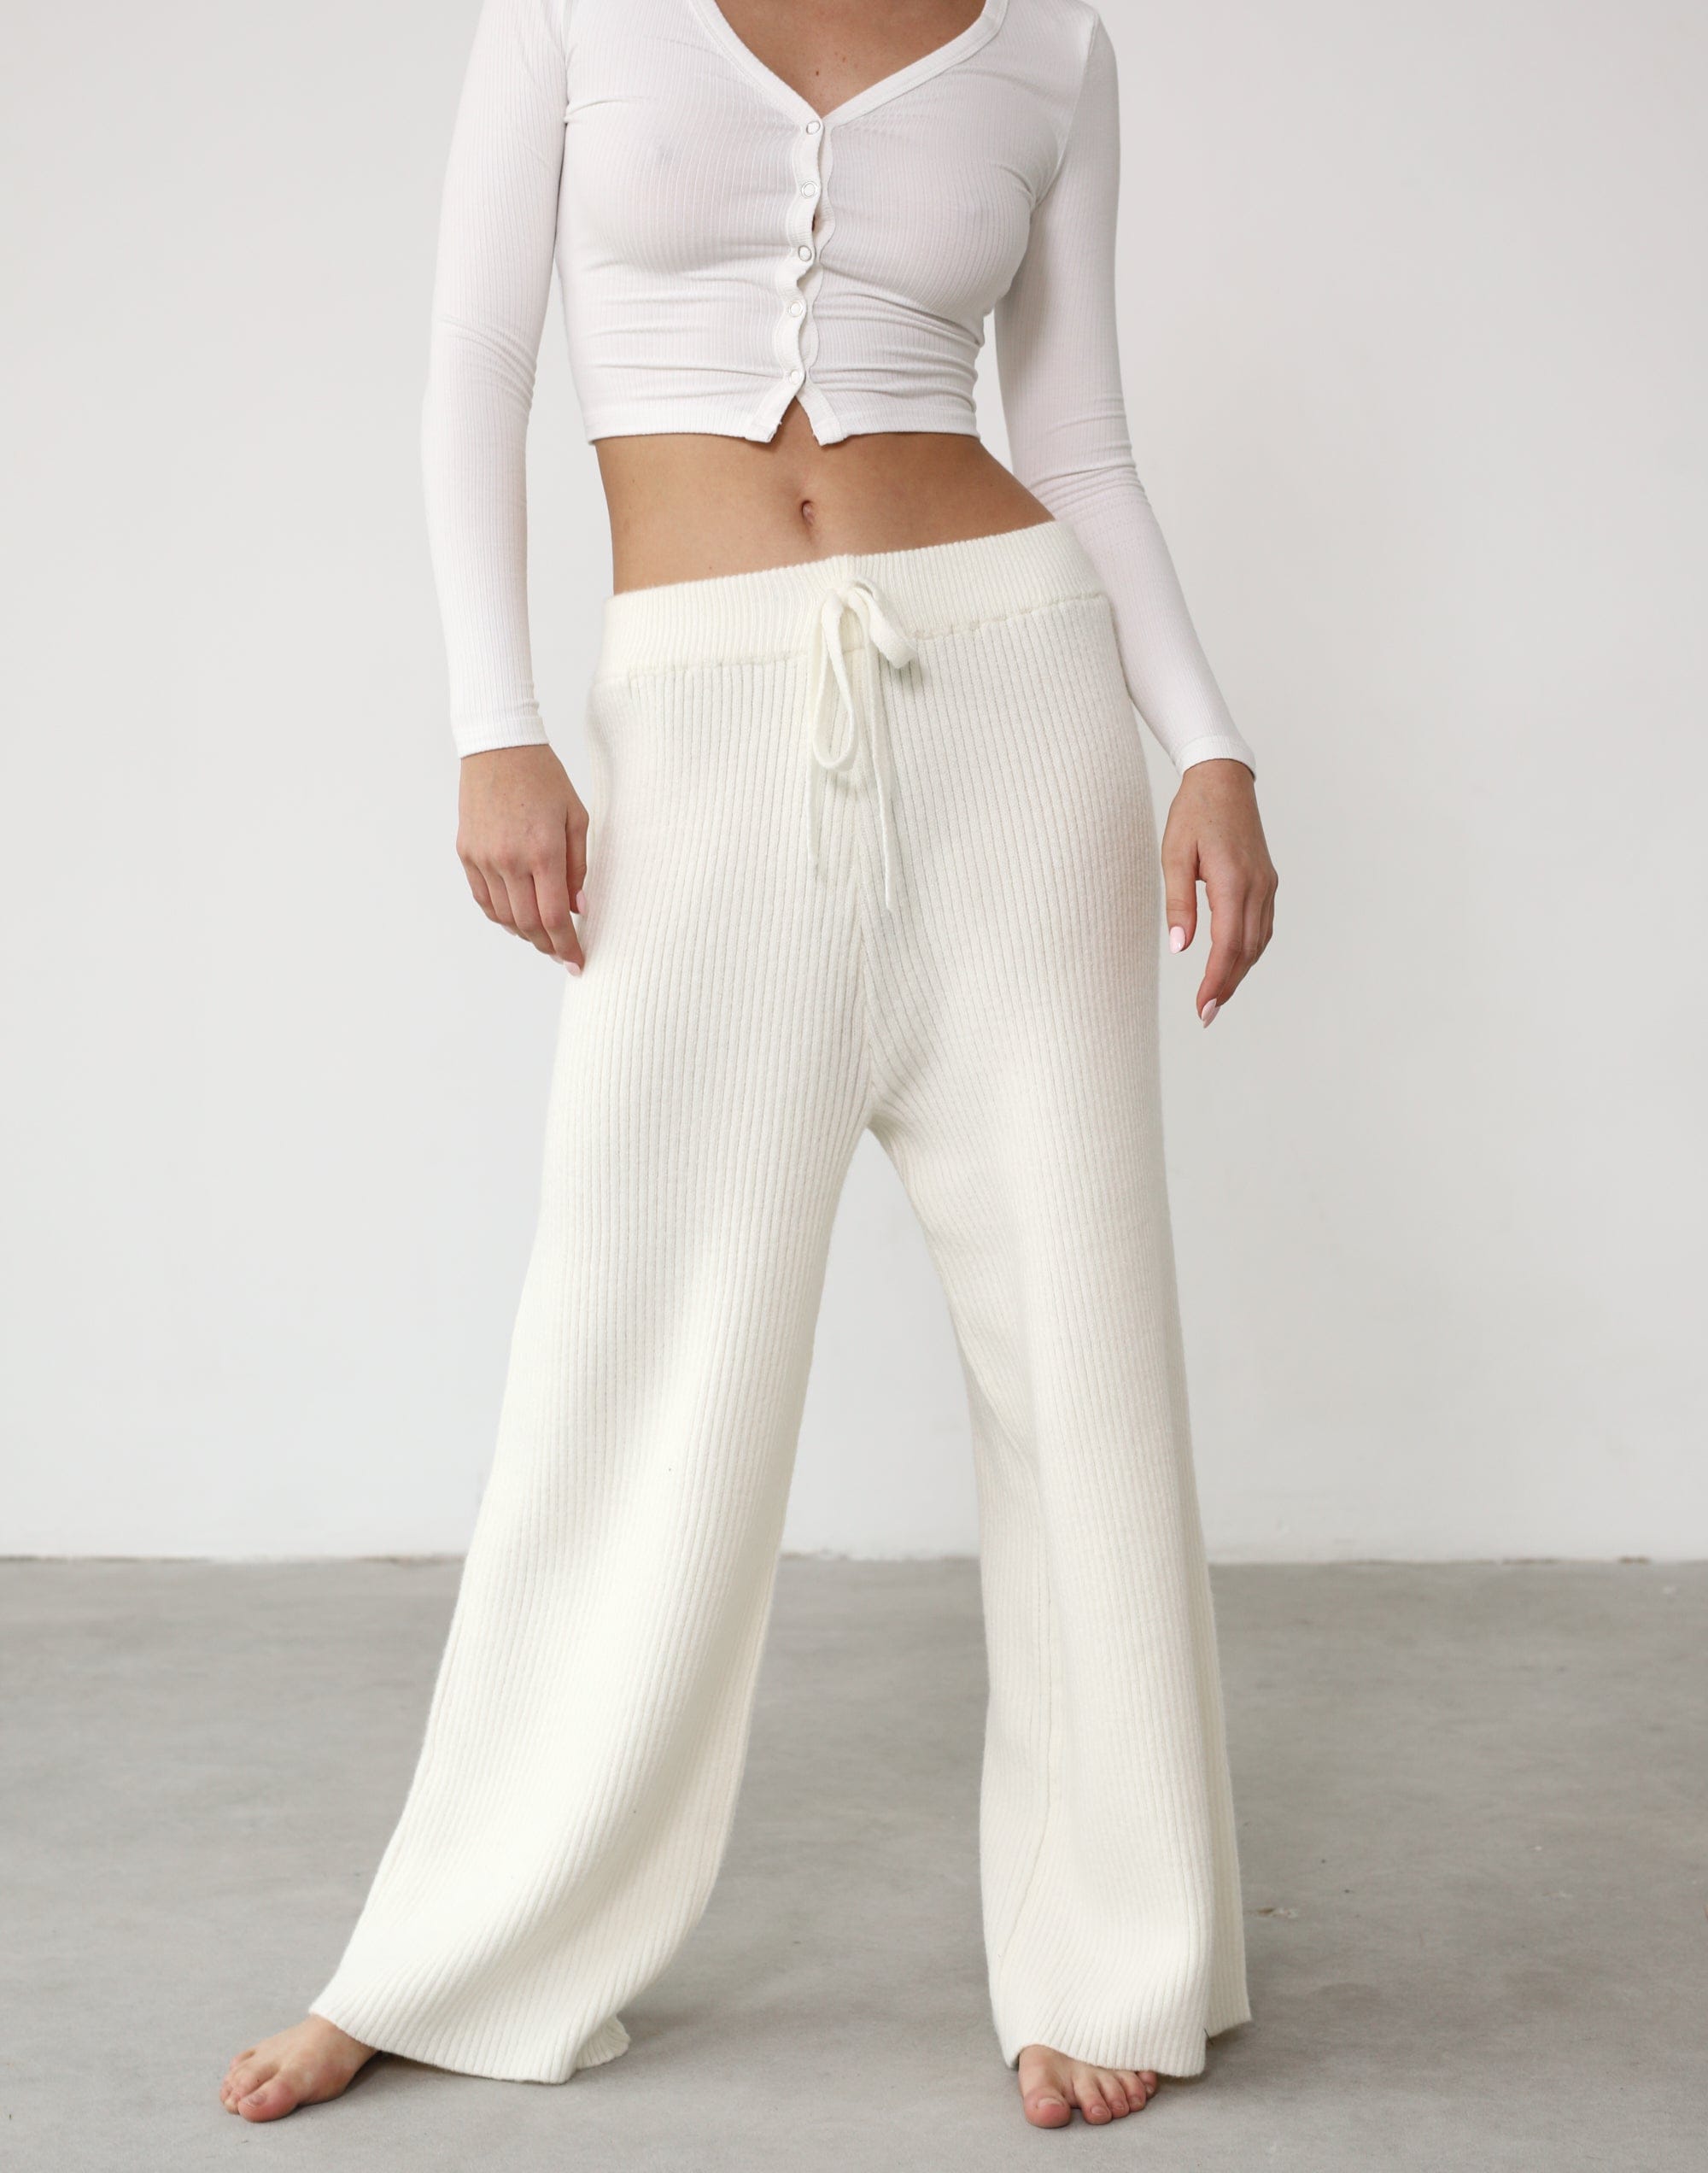 Tavinia Knit Pants (White) - Ribbed High Waisted Wide Leg Knit